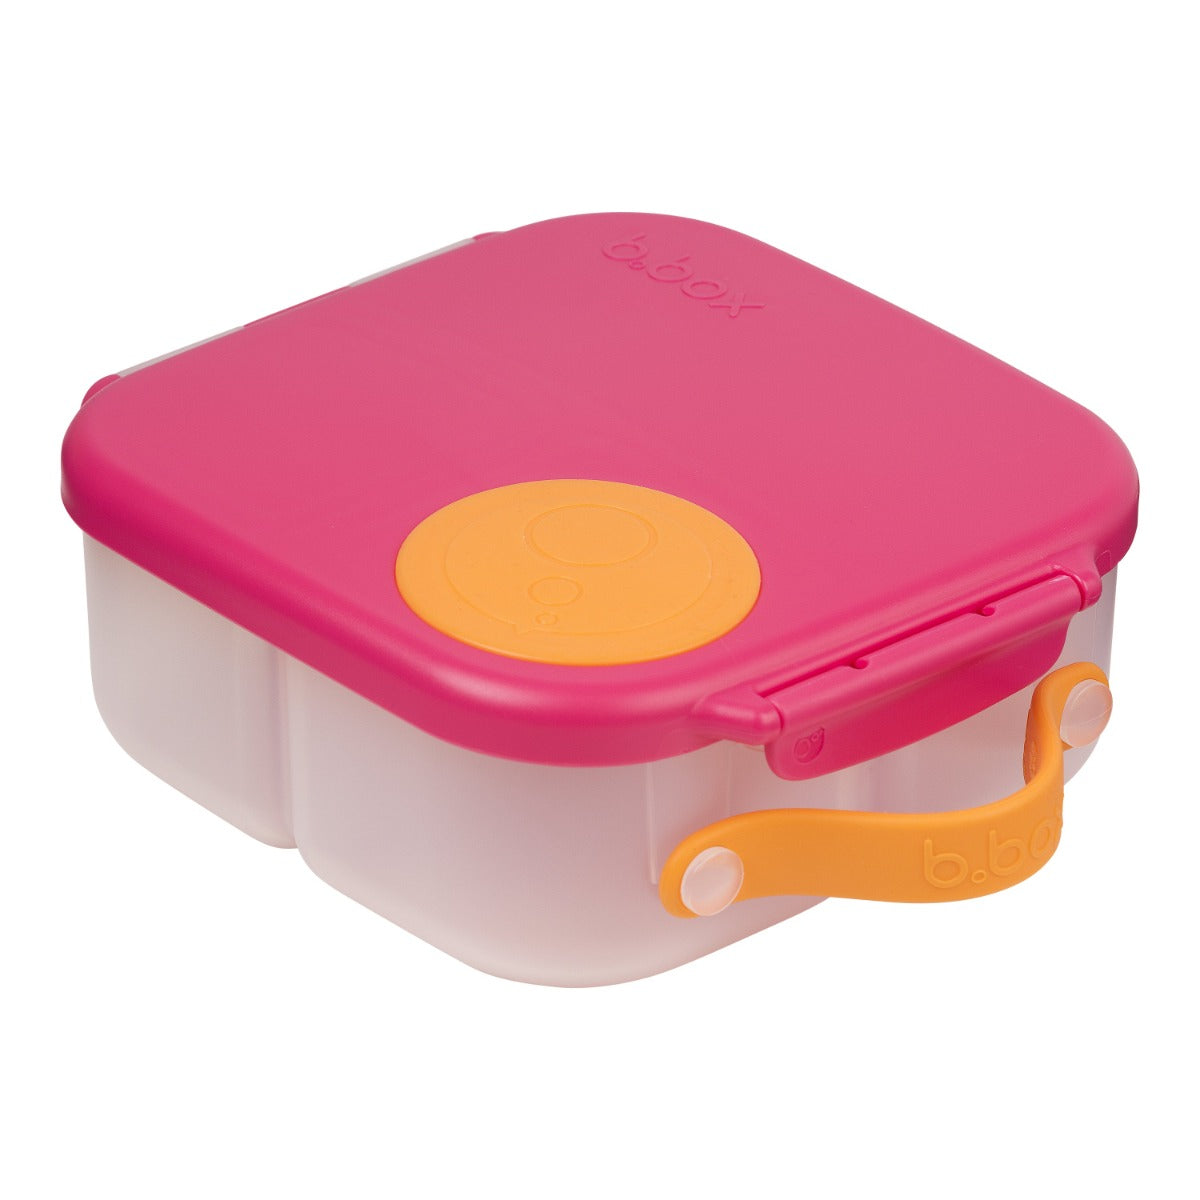 B.Box Mini Lunchbox - S'berry shake